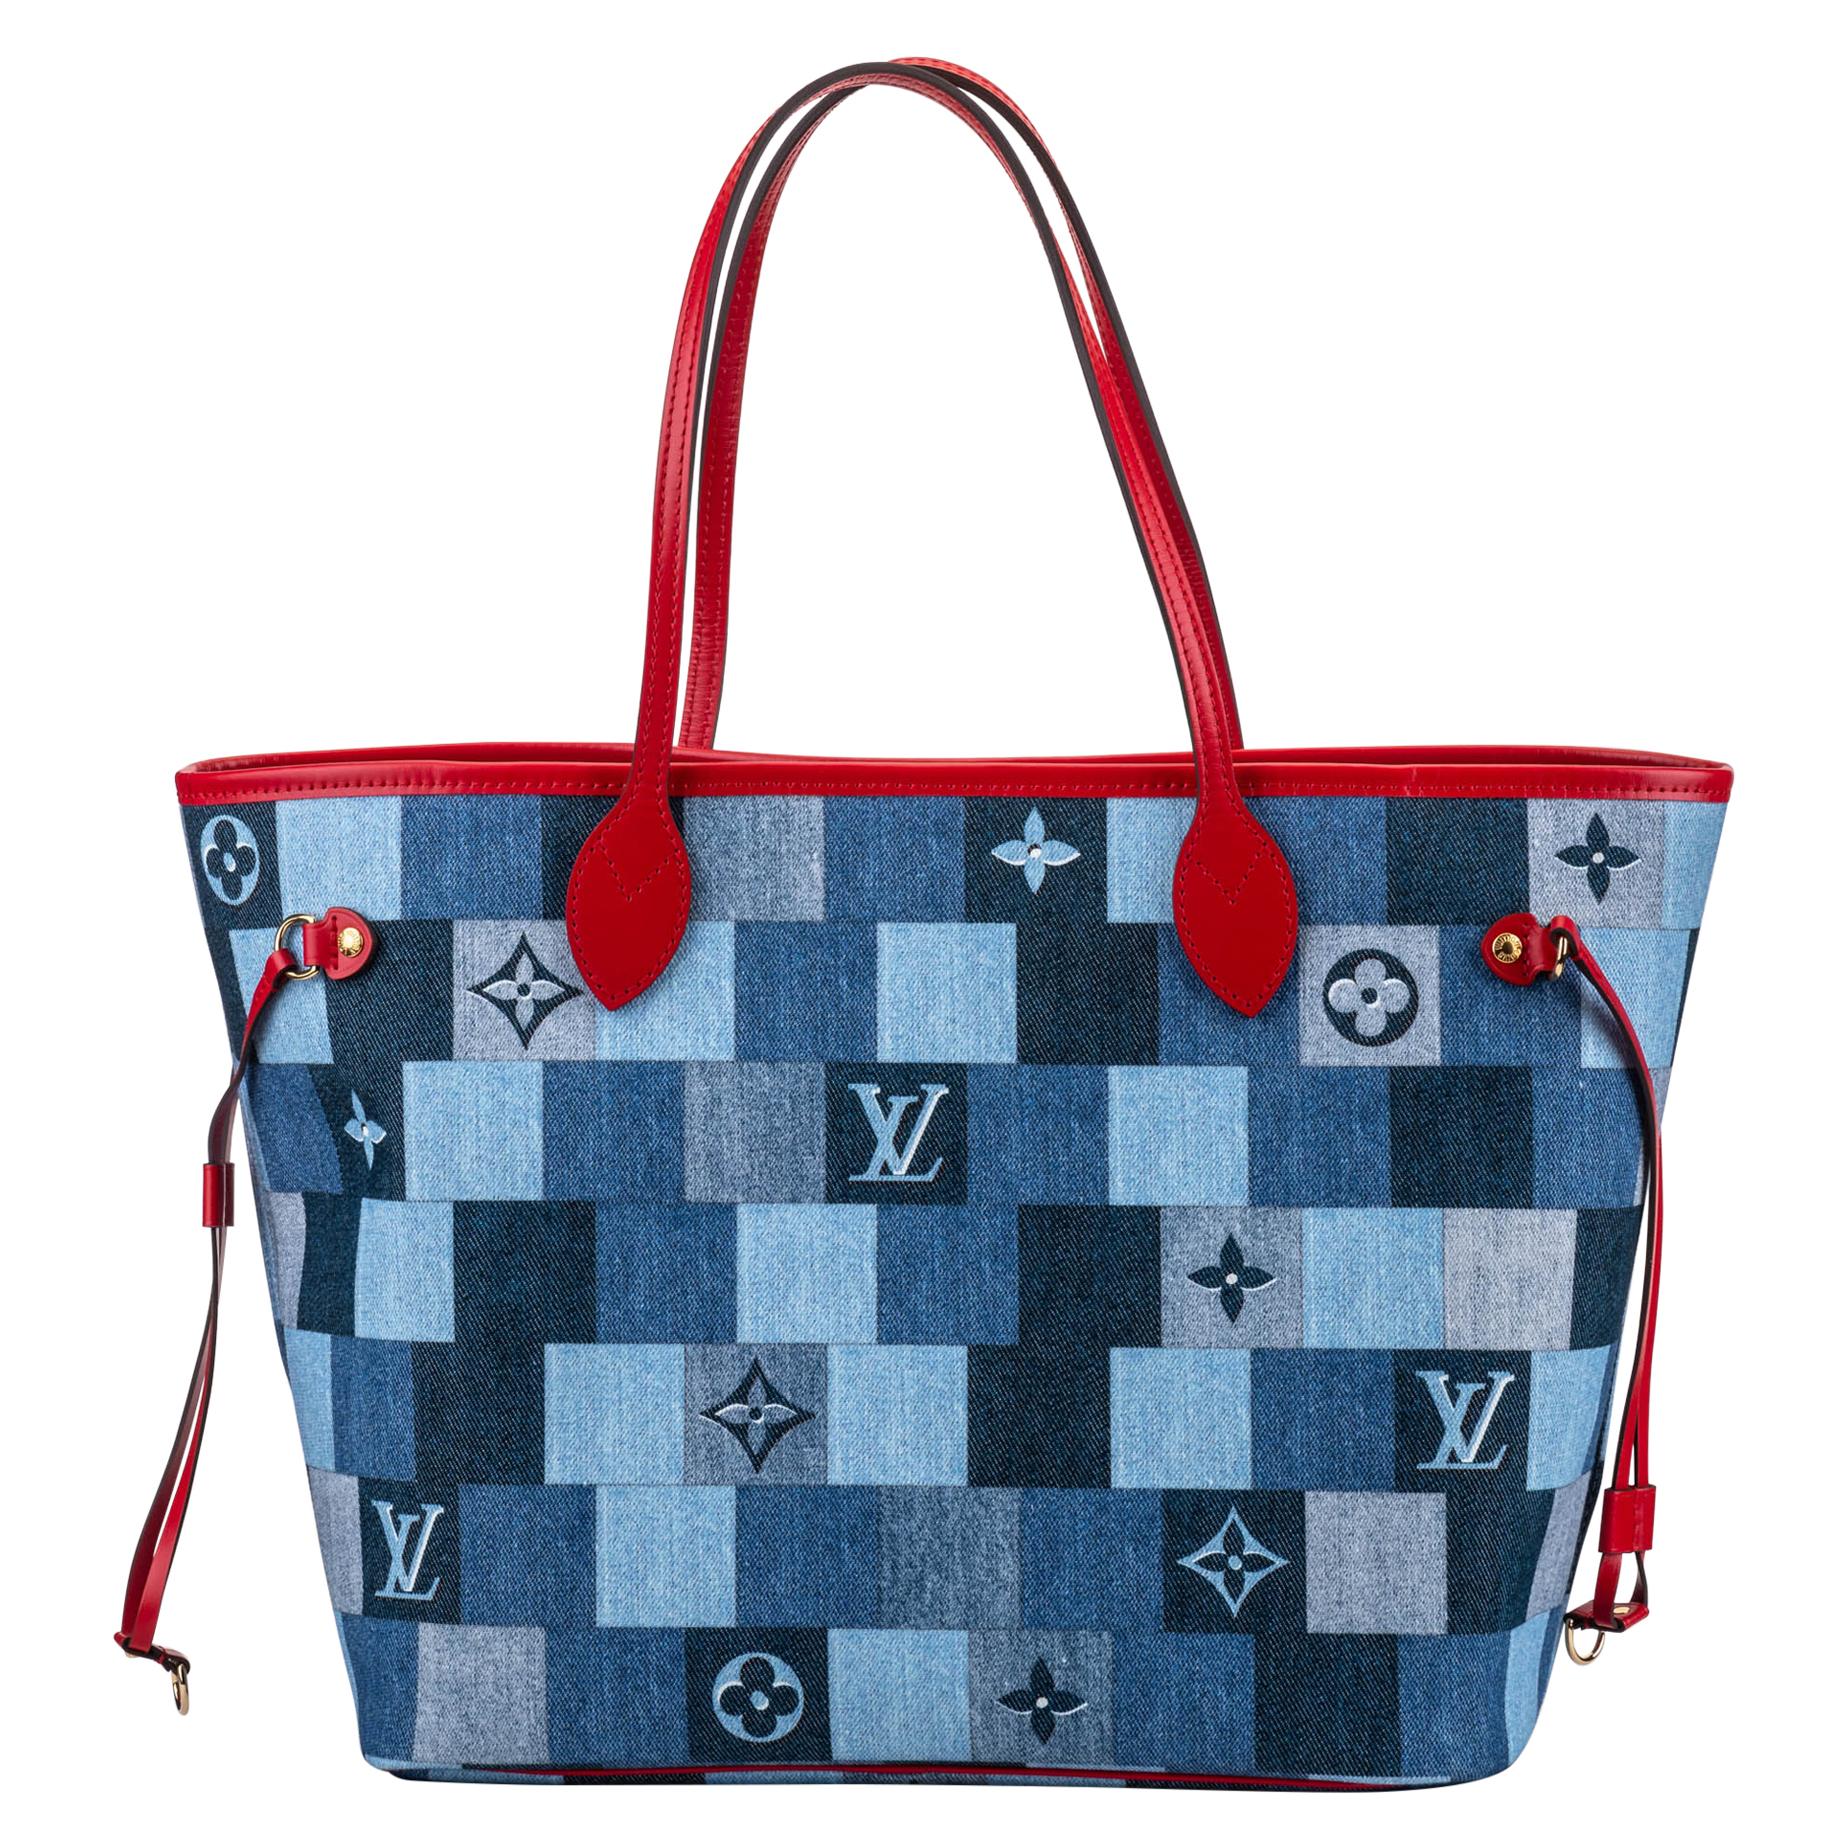 New in Box Louis Vuitton Denim Neverfull Bag